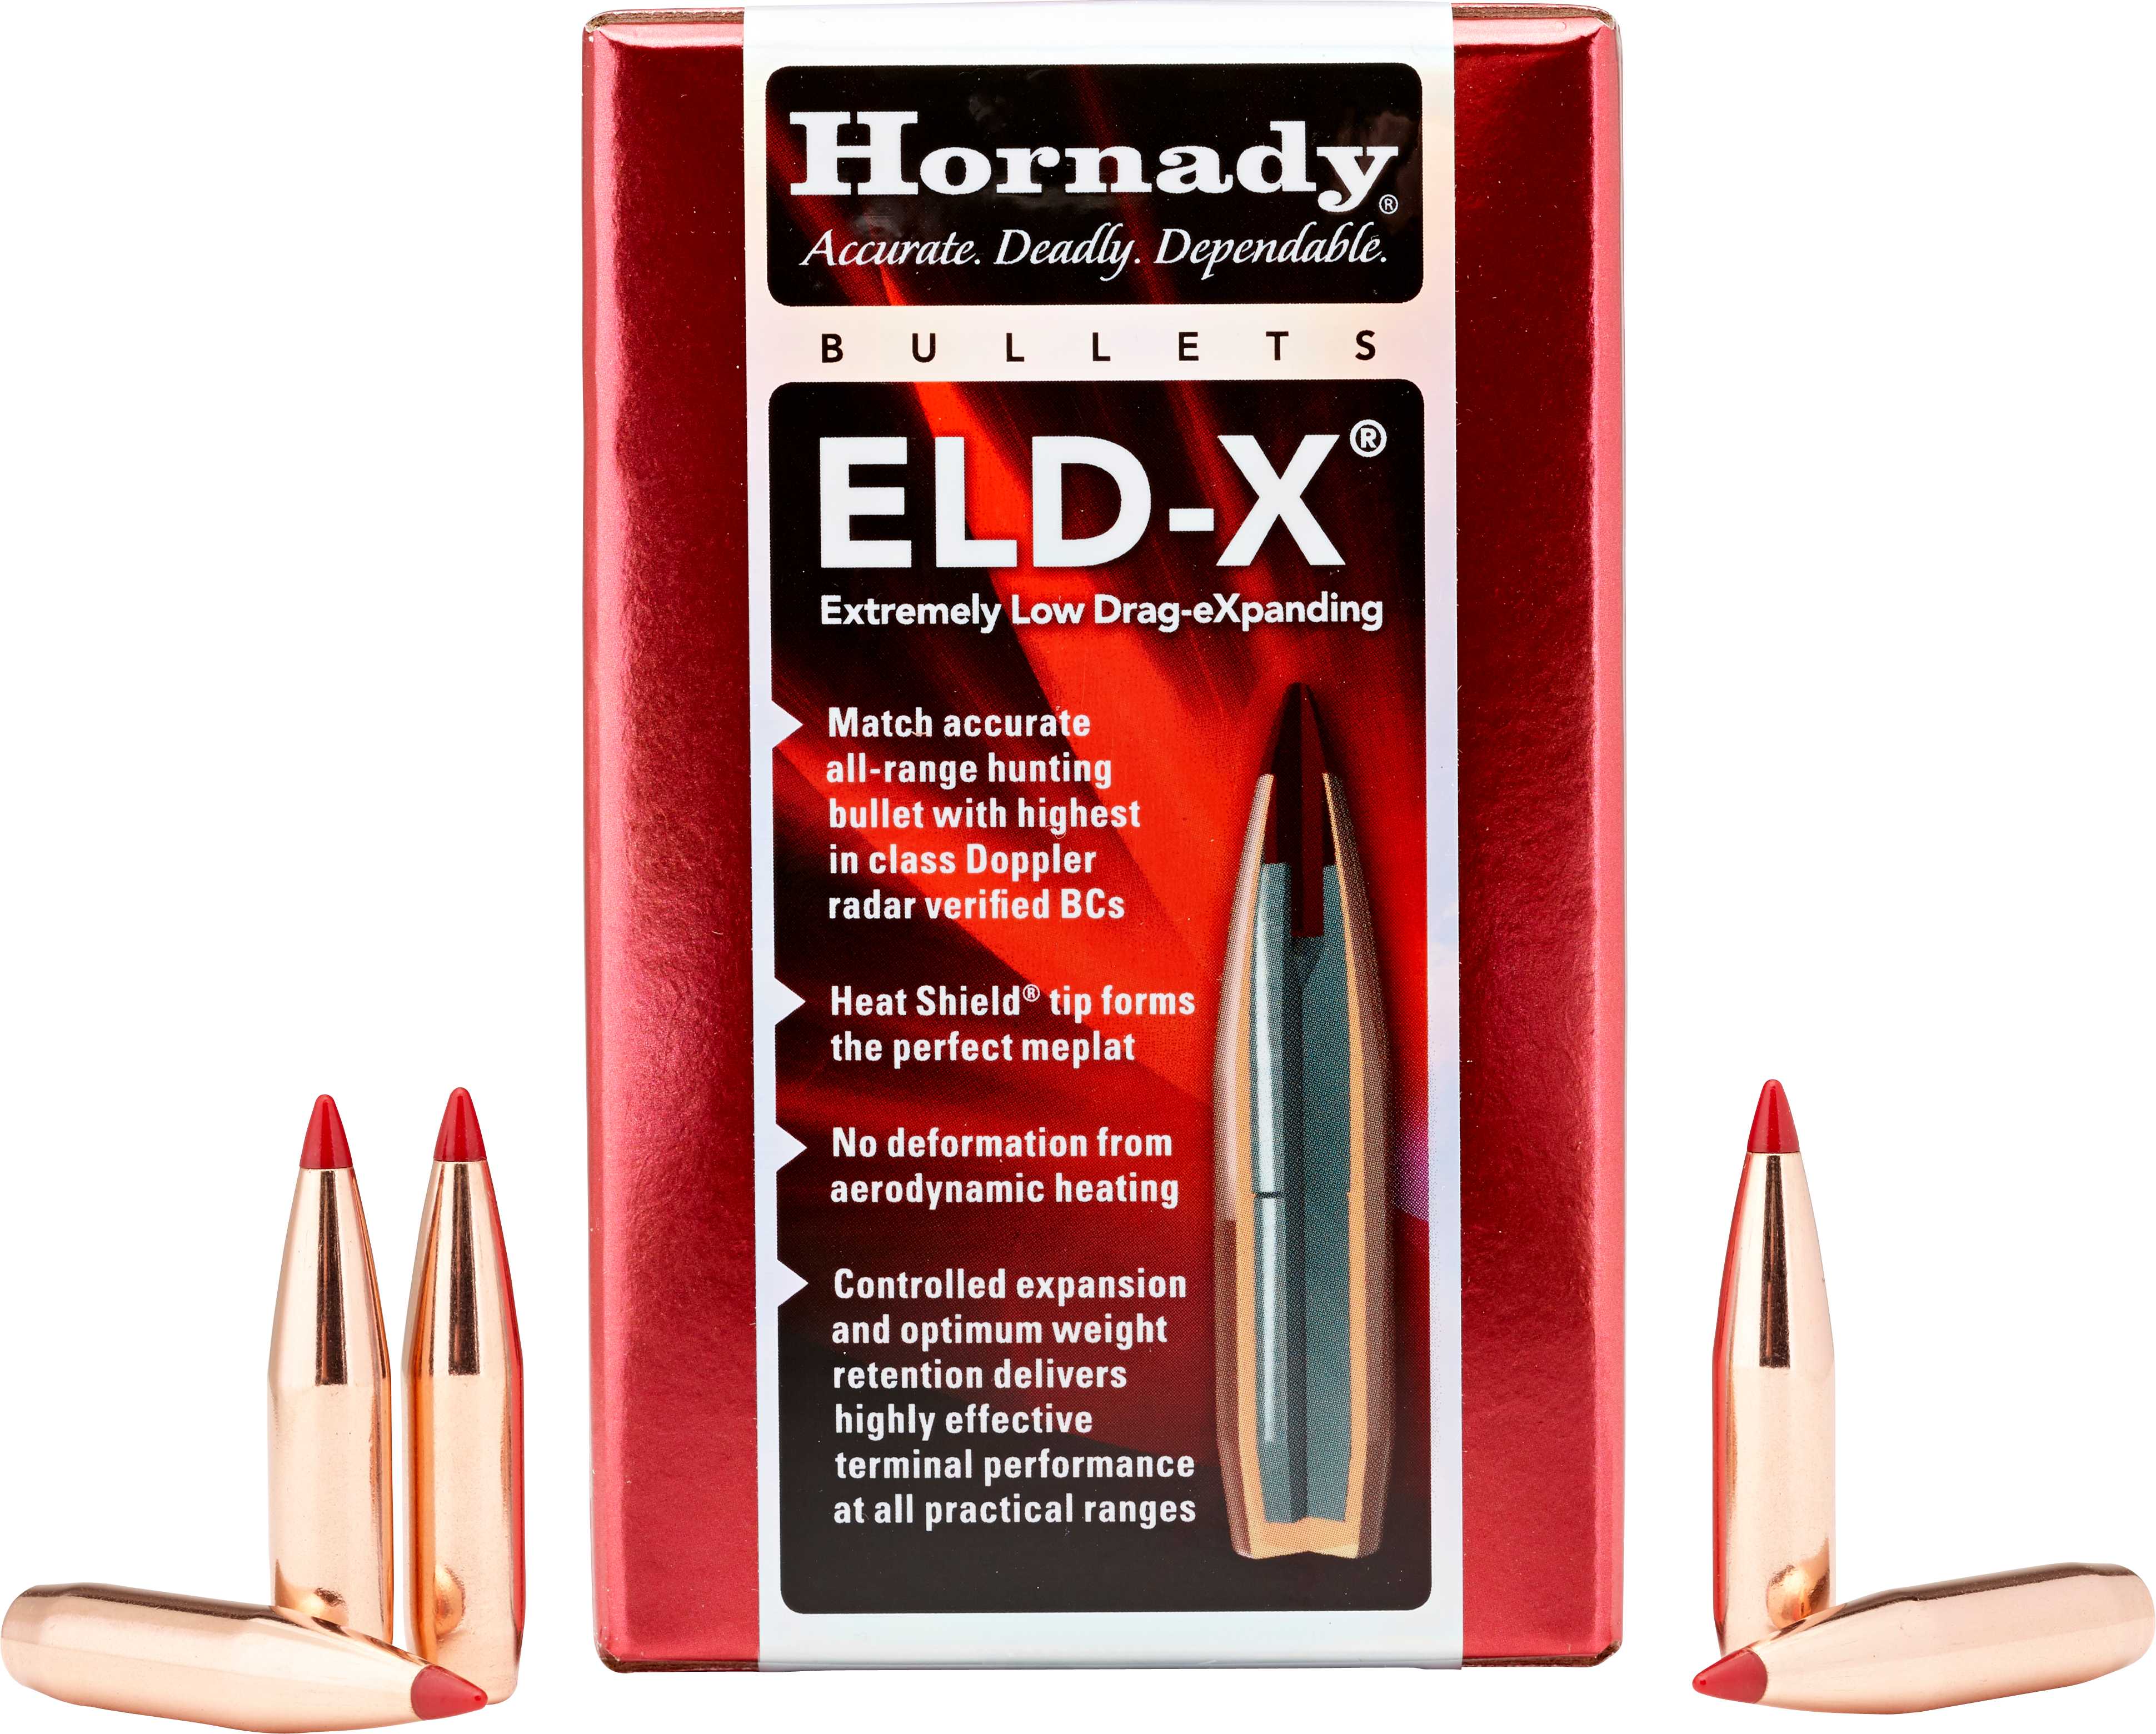 Hornady 7mm Bullets 162 Grains, Boat Tail, ELD-X, Per 100 Md: 2840